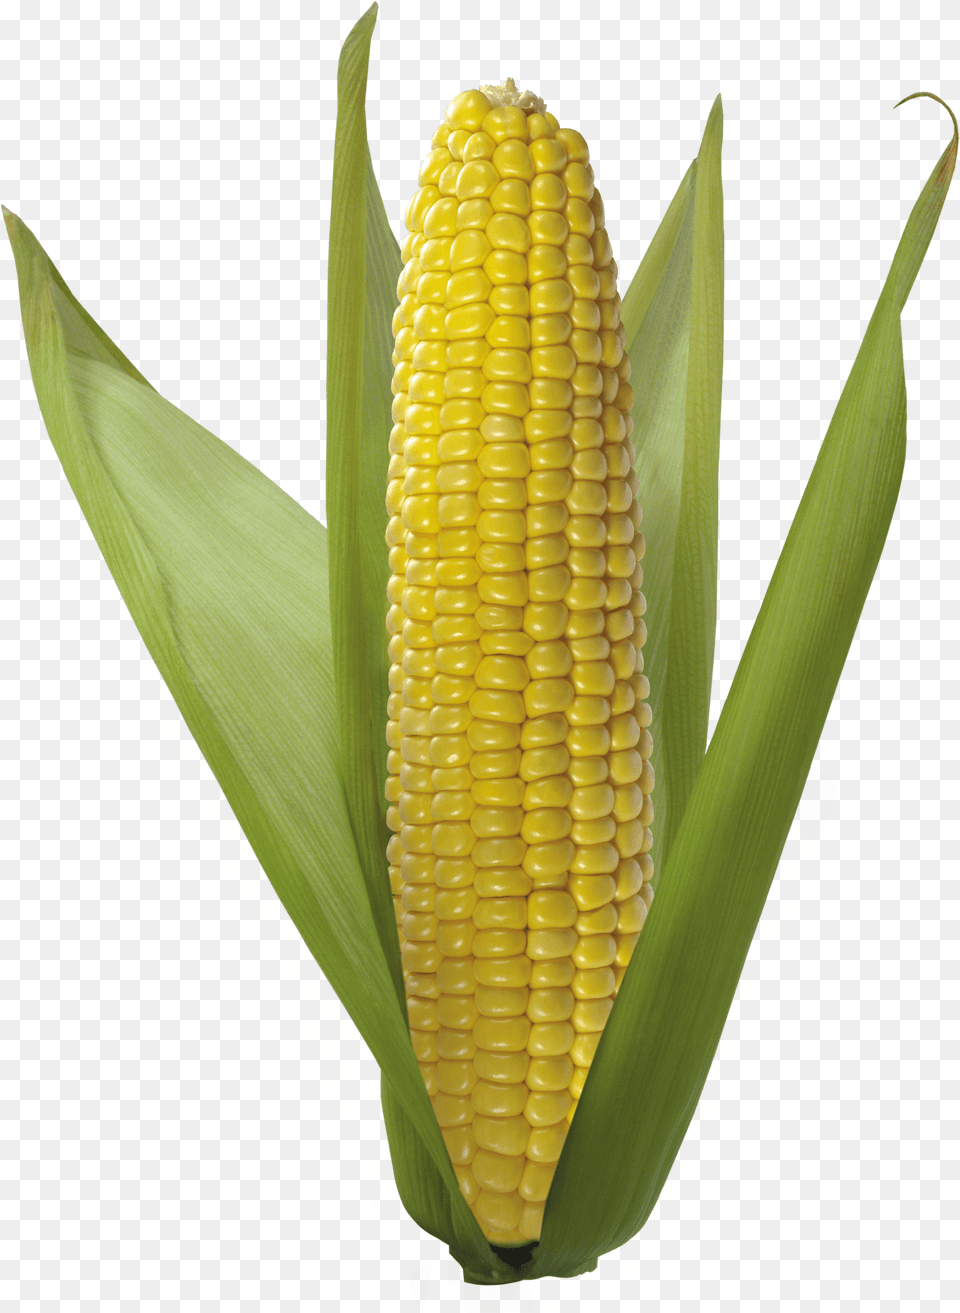 Corn On The Cobcorn Kernelssweet Corncorncorn On Trump Corn, Food, Grain, Plant, Produce Png